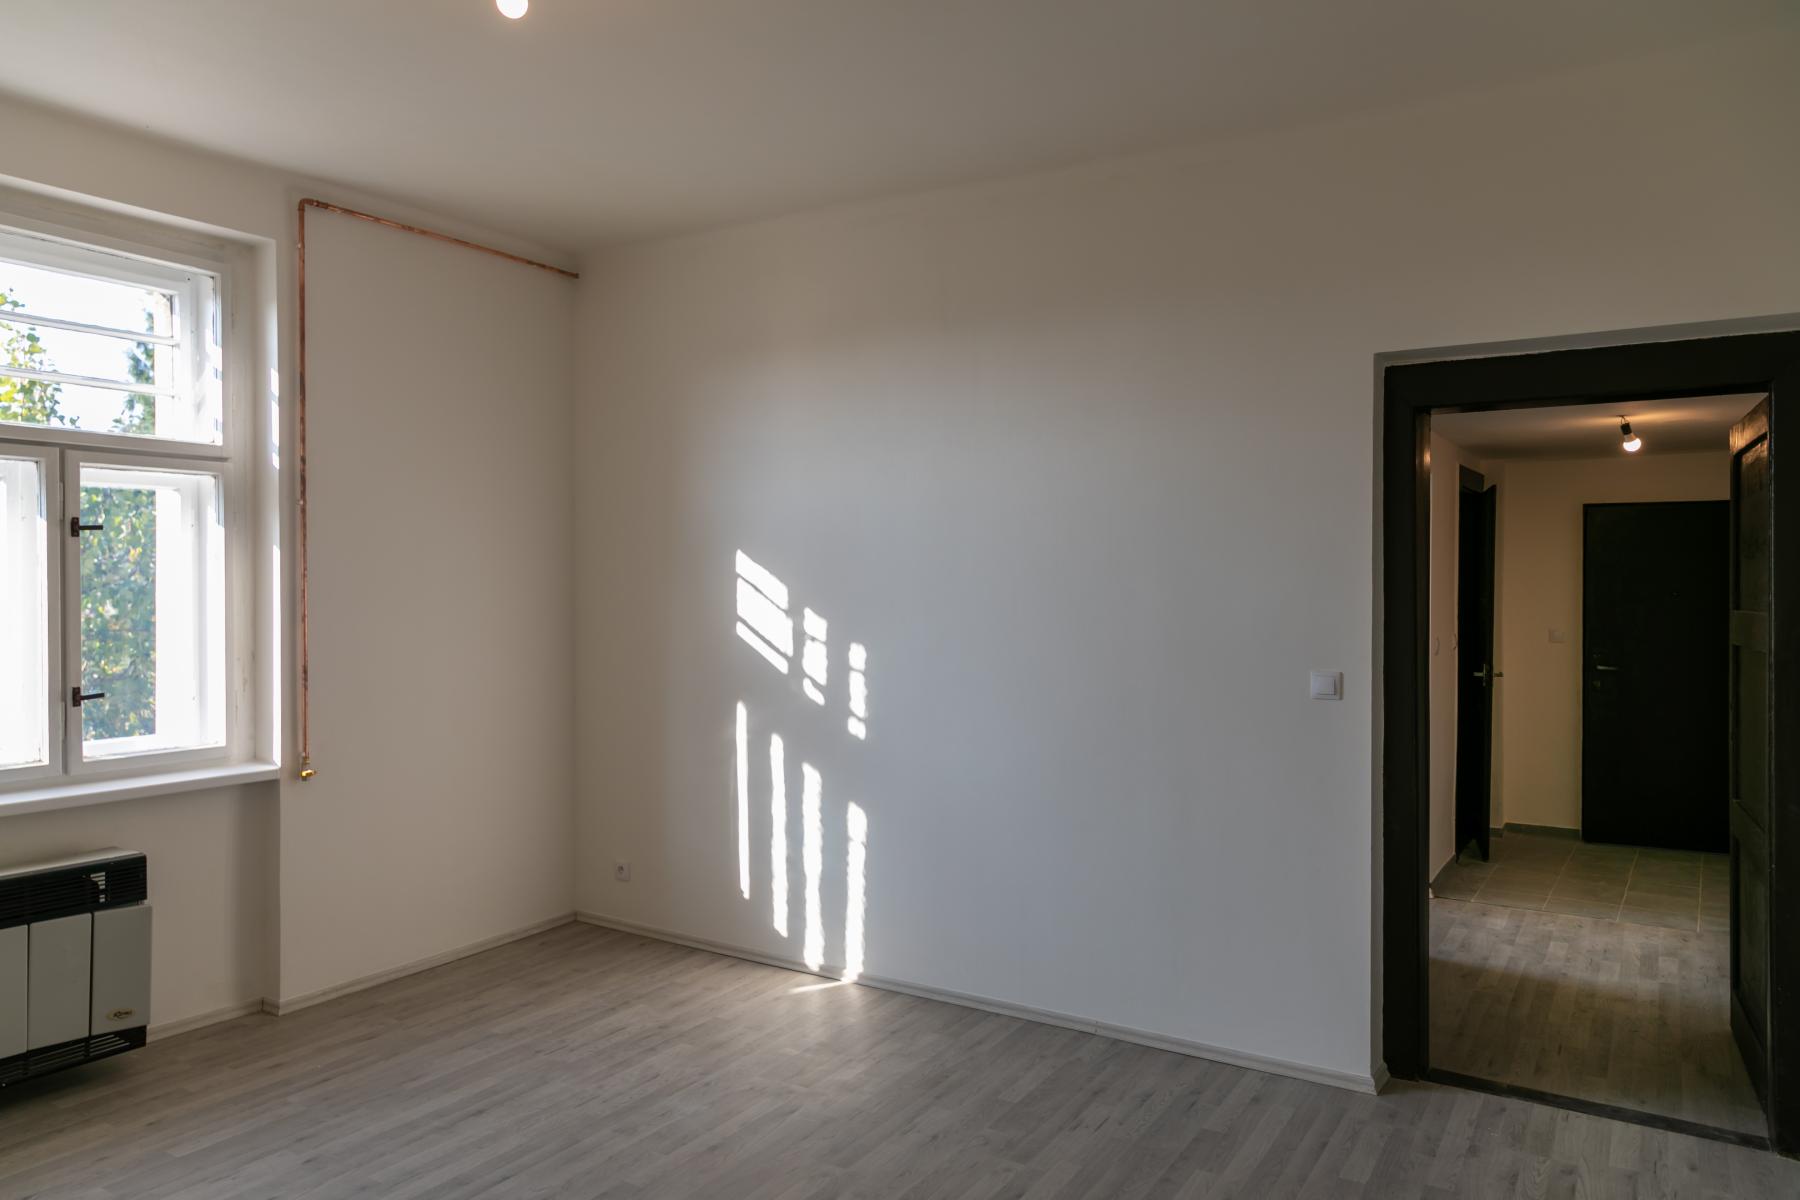 Prodej bytu 1+1 po rekonstrukci v Praze - Libni, obrázek č. 1